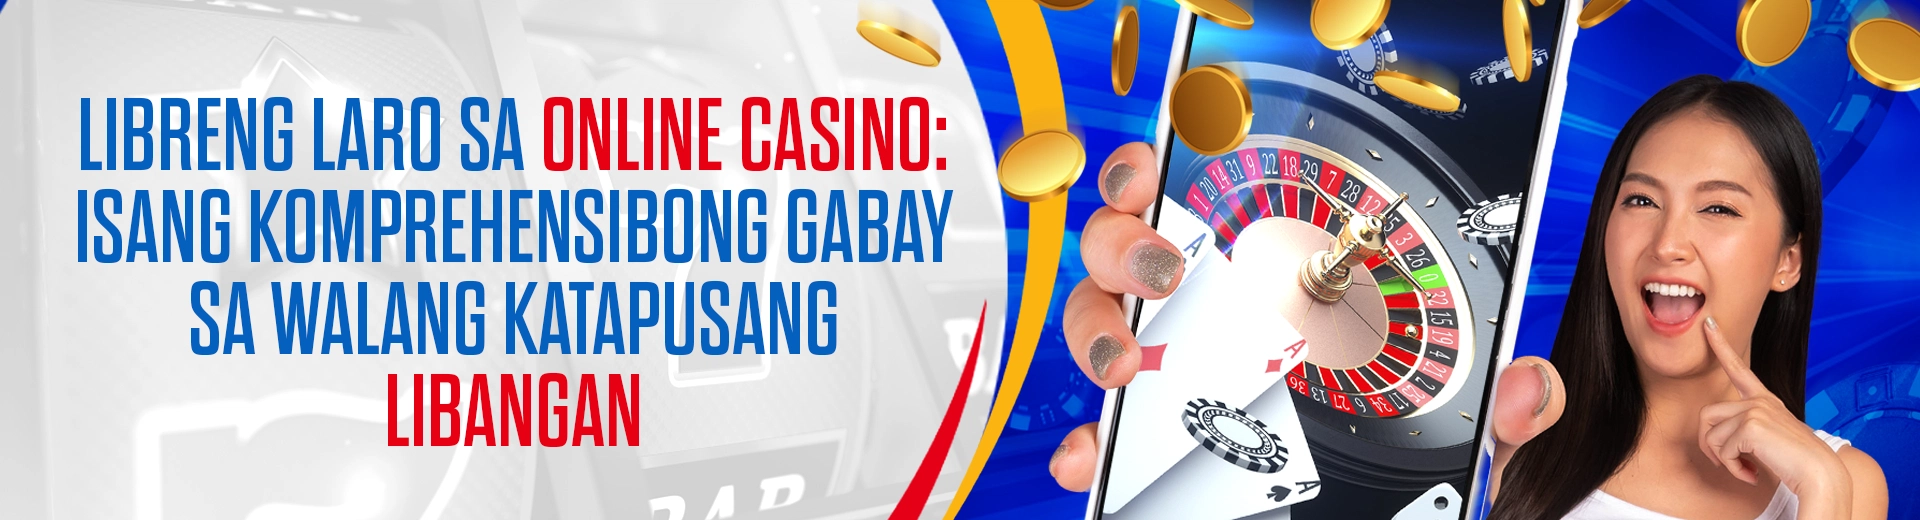 libreng laro sa online casino